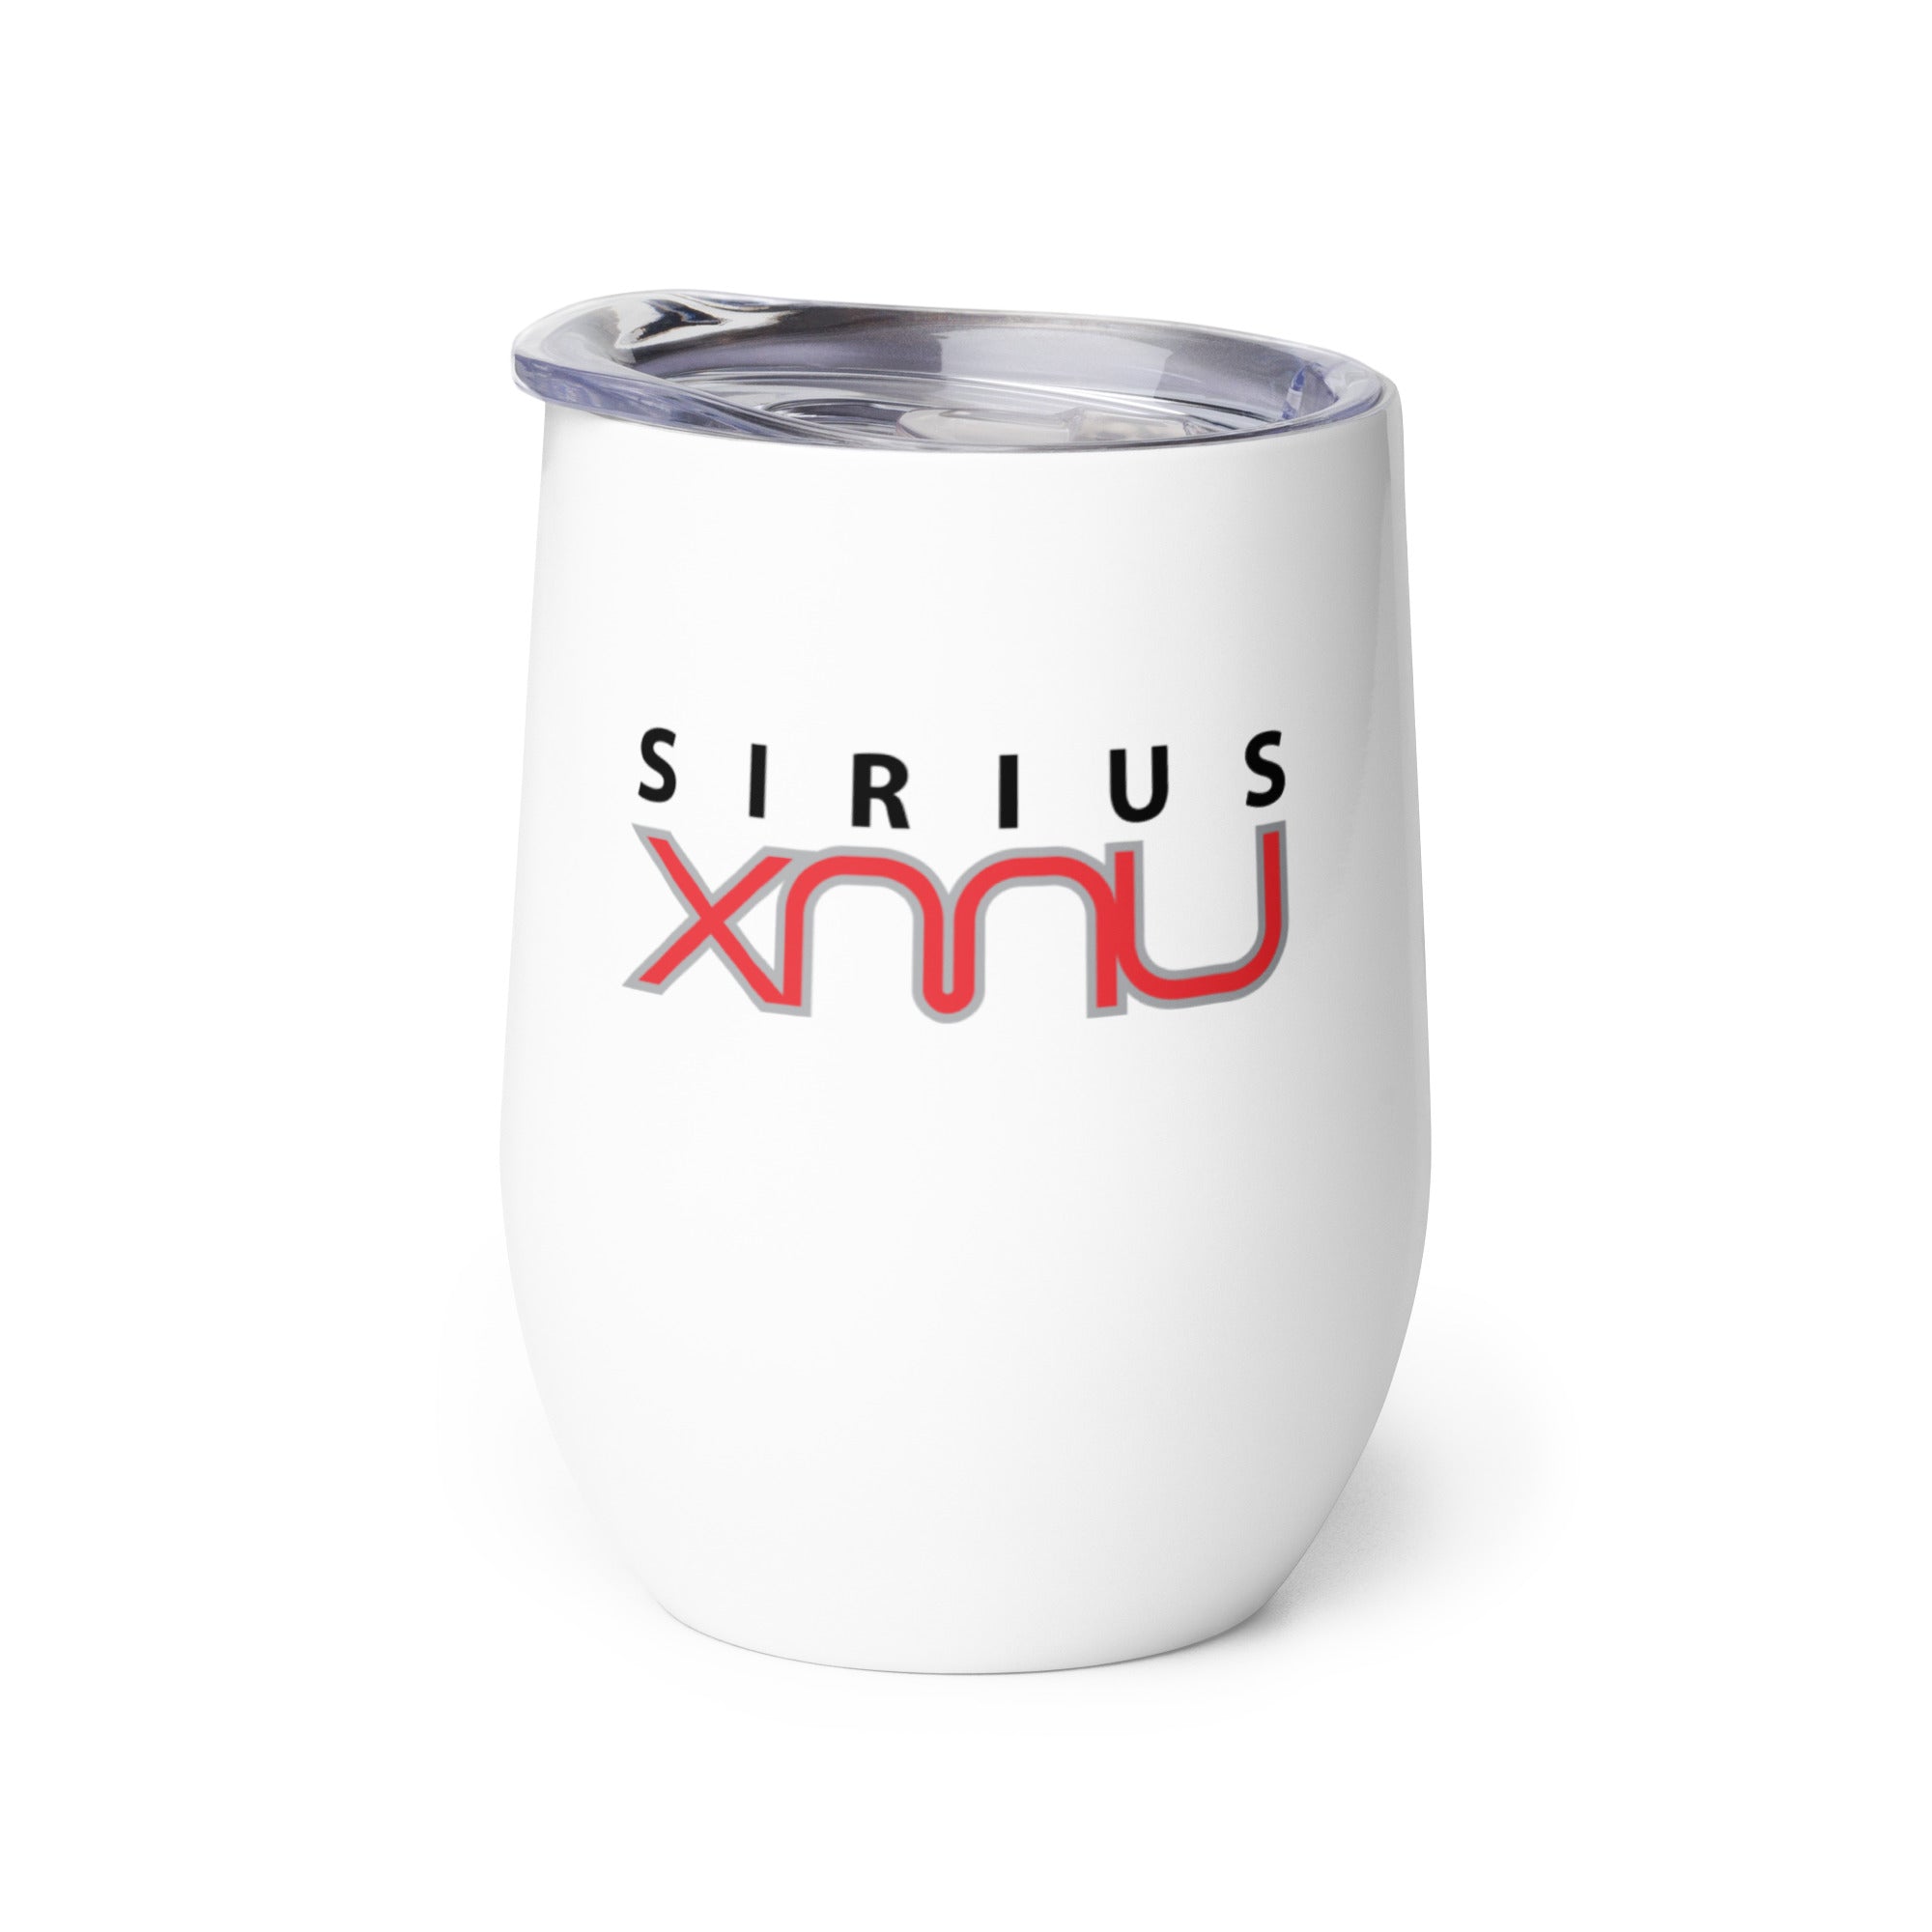 SiriusXMU: Wine Tumbler